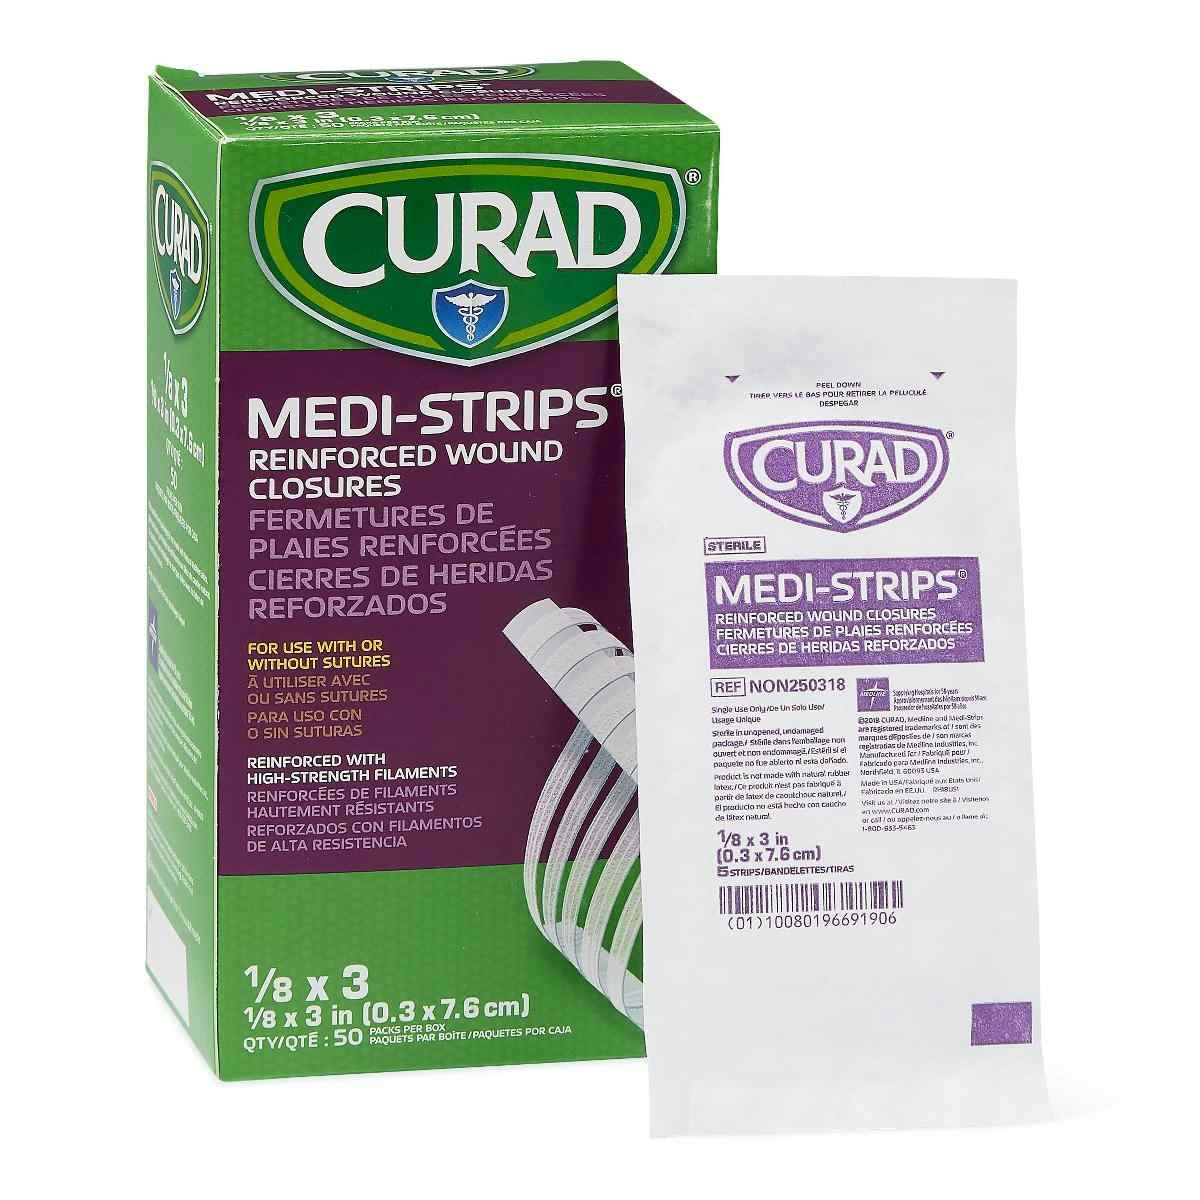 Curad Medi-Strip Reinforced Wound Closures, NON250318Z, 1/8" X 3" - Box of 50